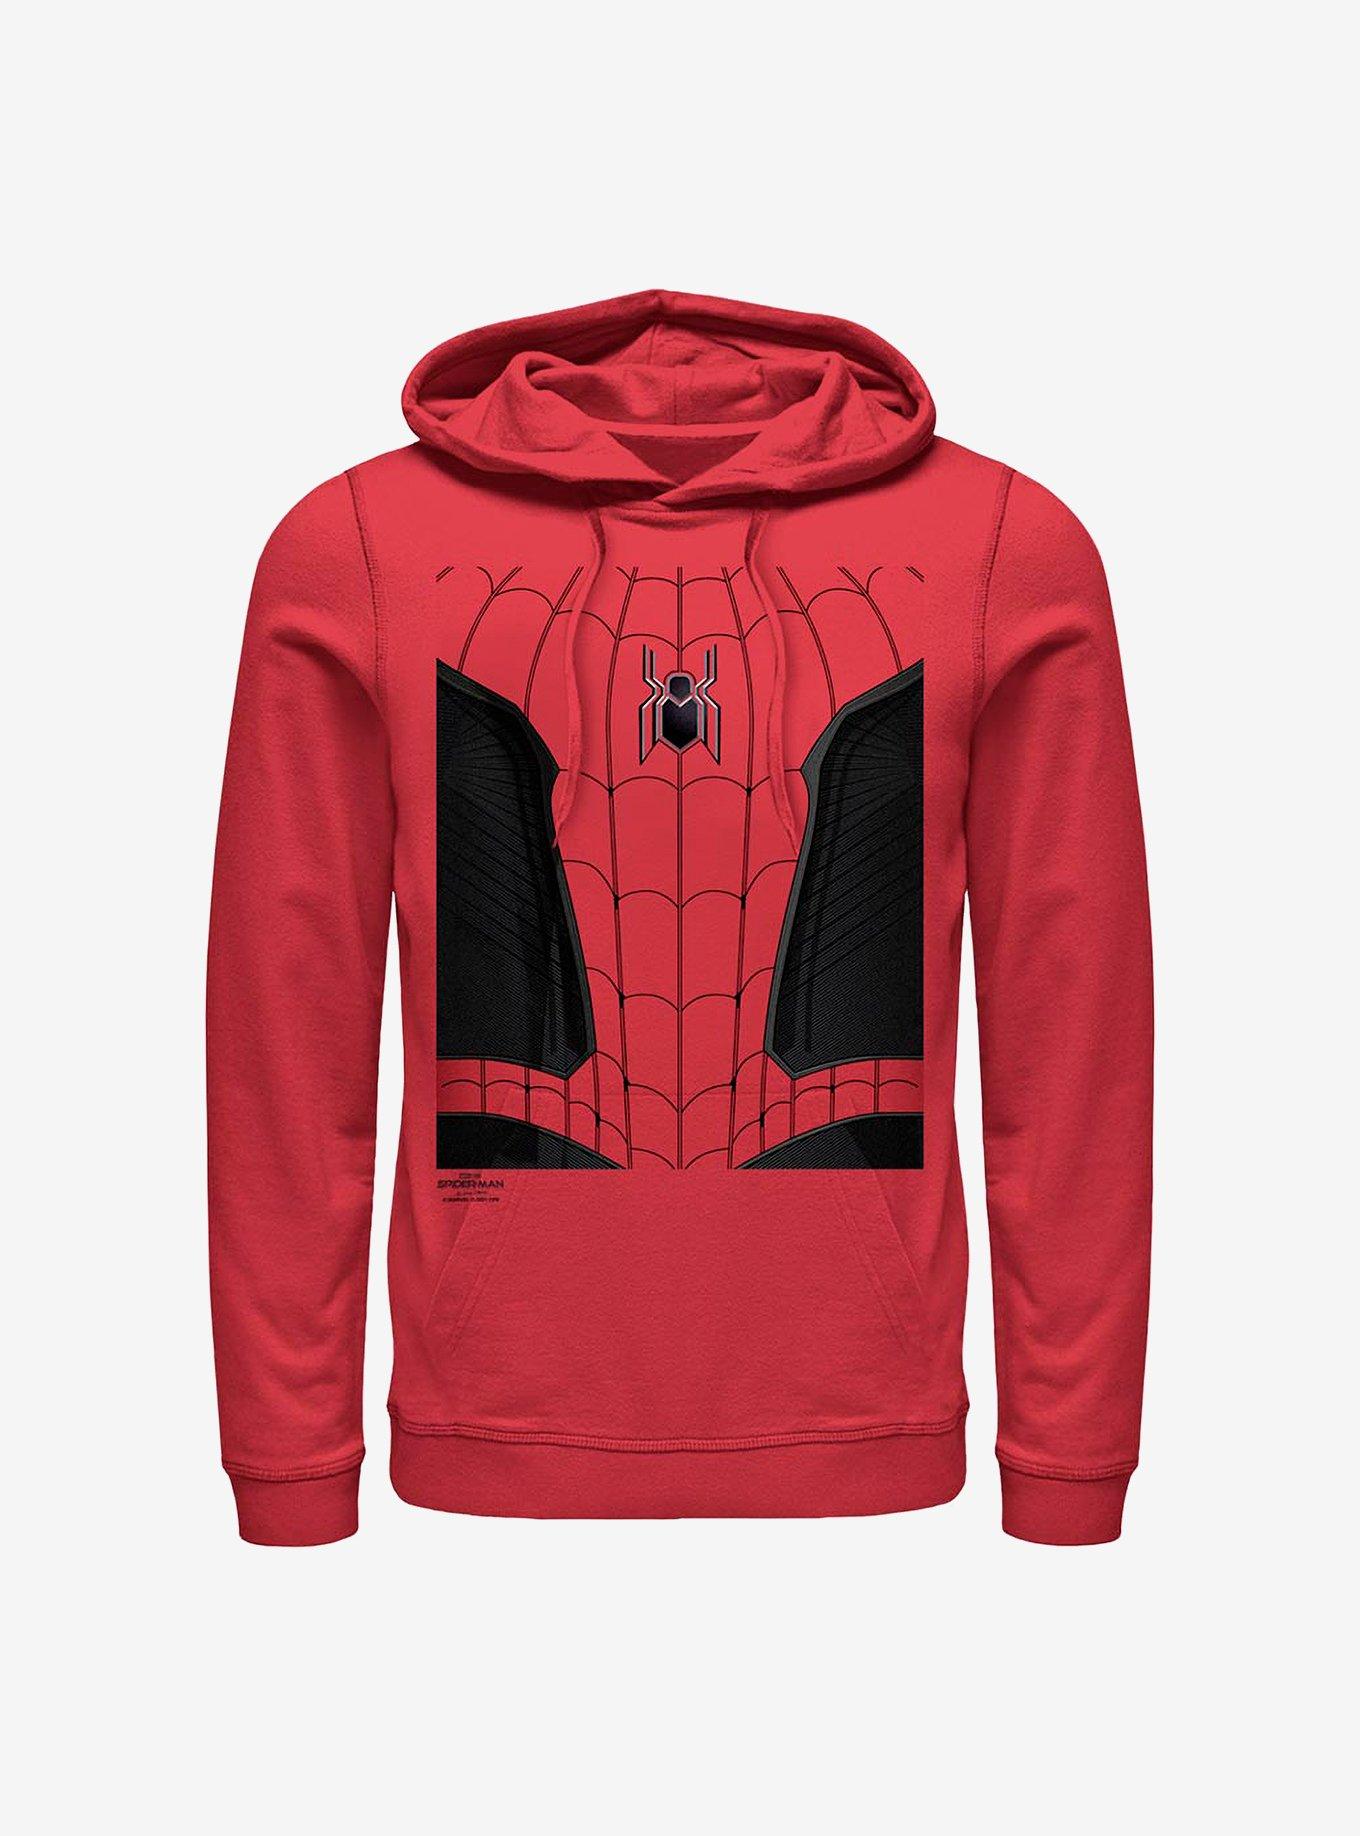 Marvel Spider-Man Spidey Suit Hoodie